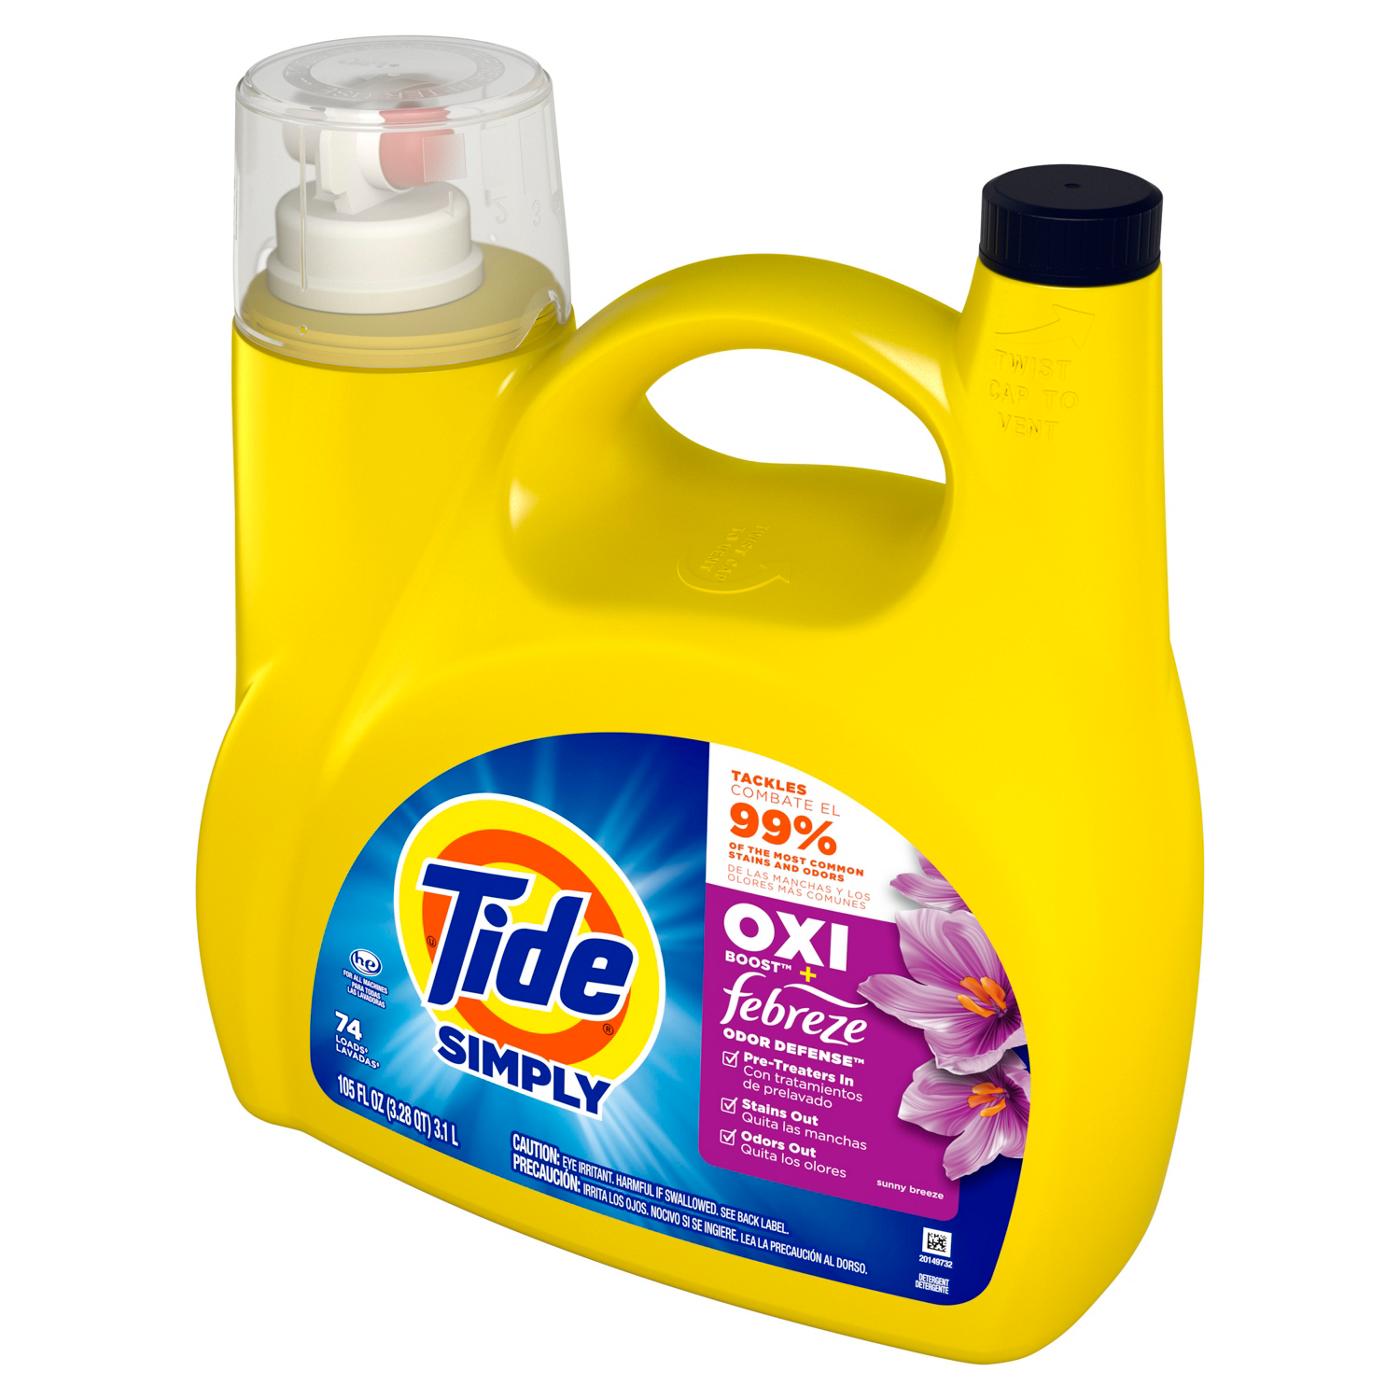 Tide Simply Oxi Boost + Febreze Odor Defense HE Liquid Laundry Detergent, 74 Loads - Sunny Breeze; image 2 of 9